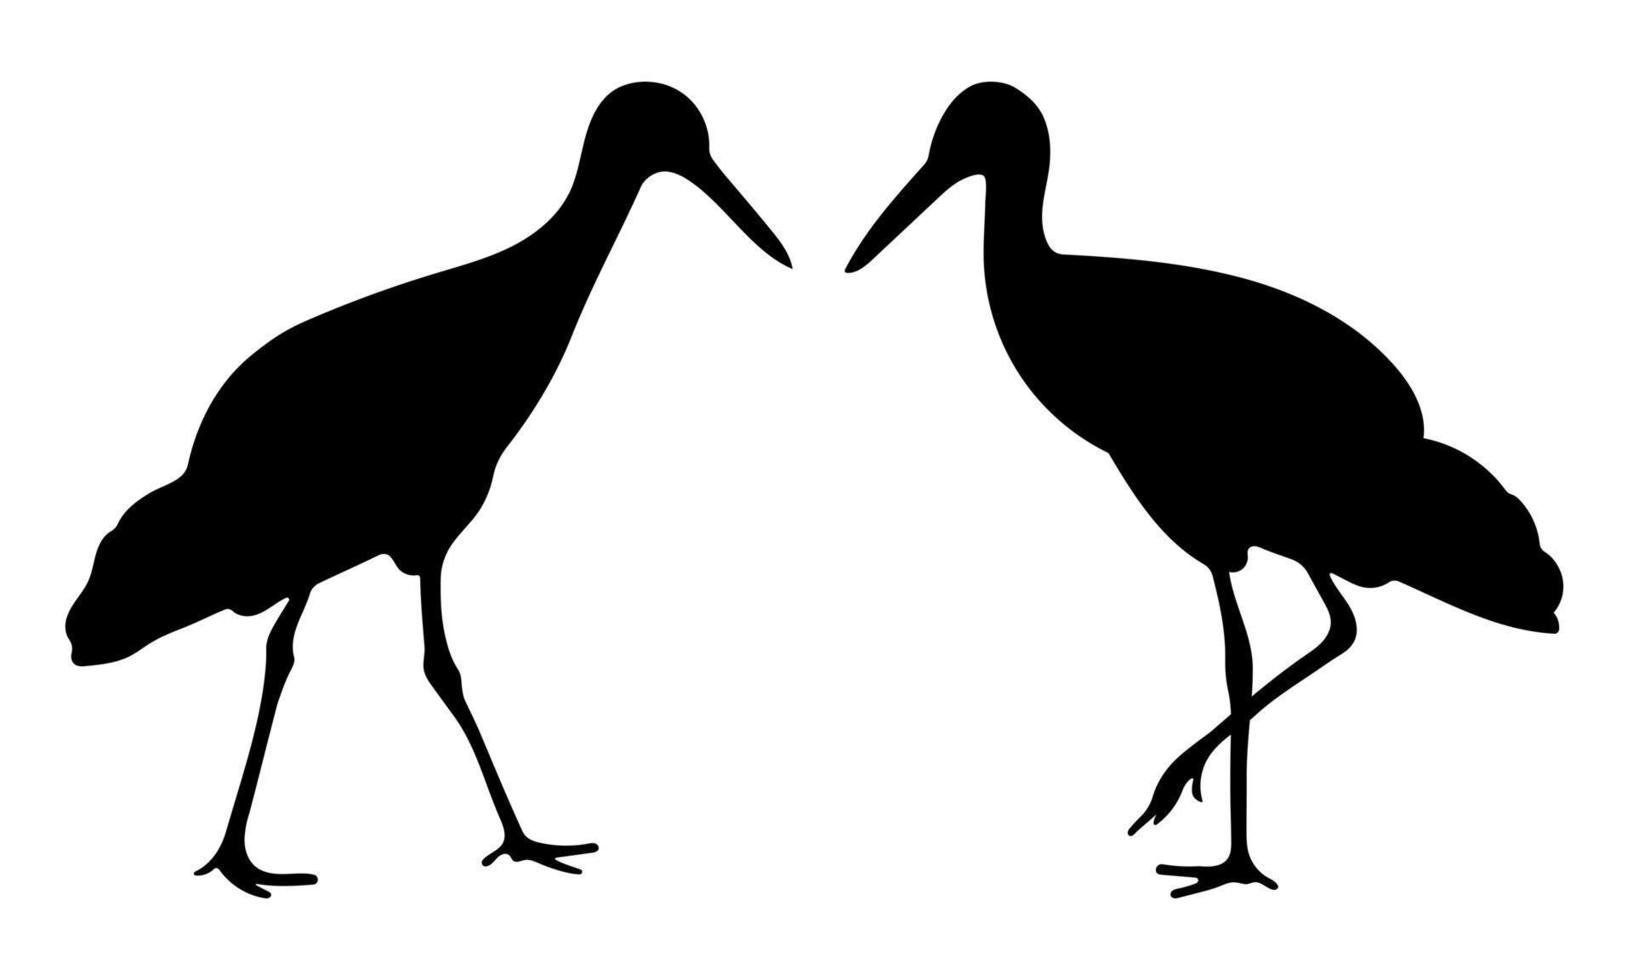 Bird stork shape, black silhouette of a stork, wildlife animal vector